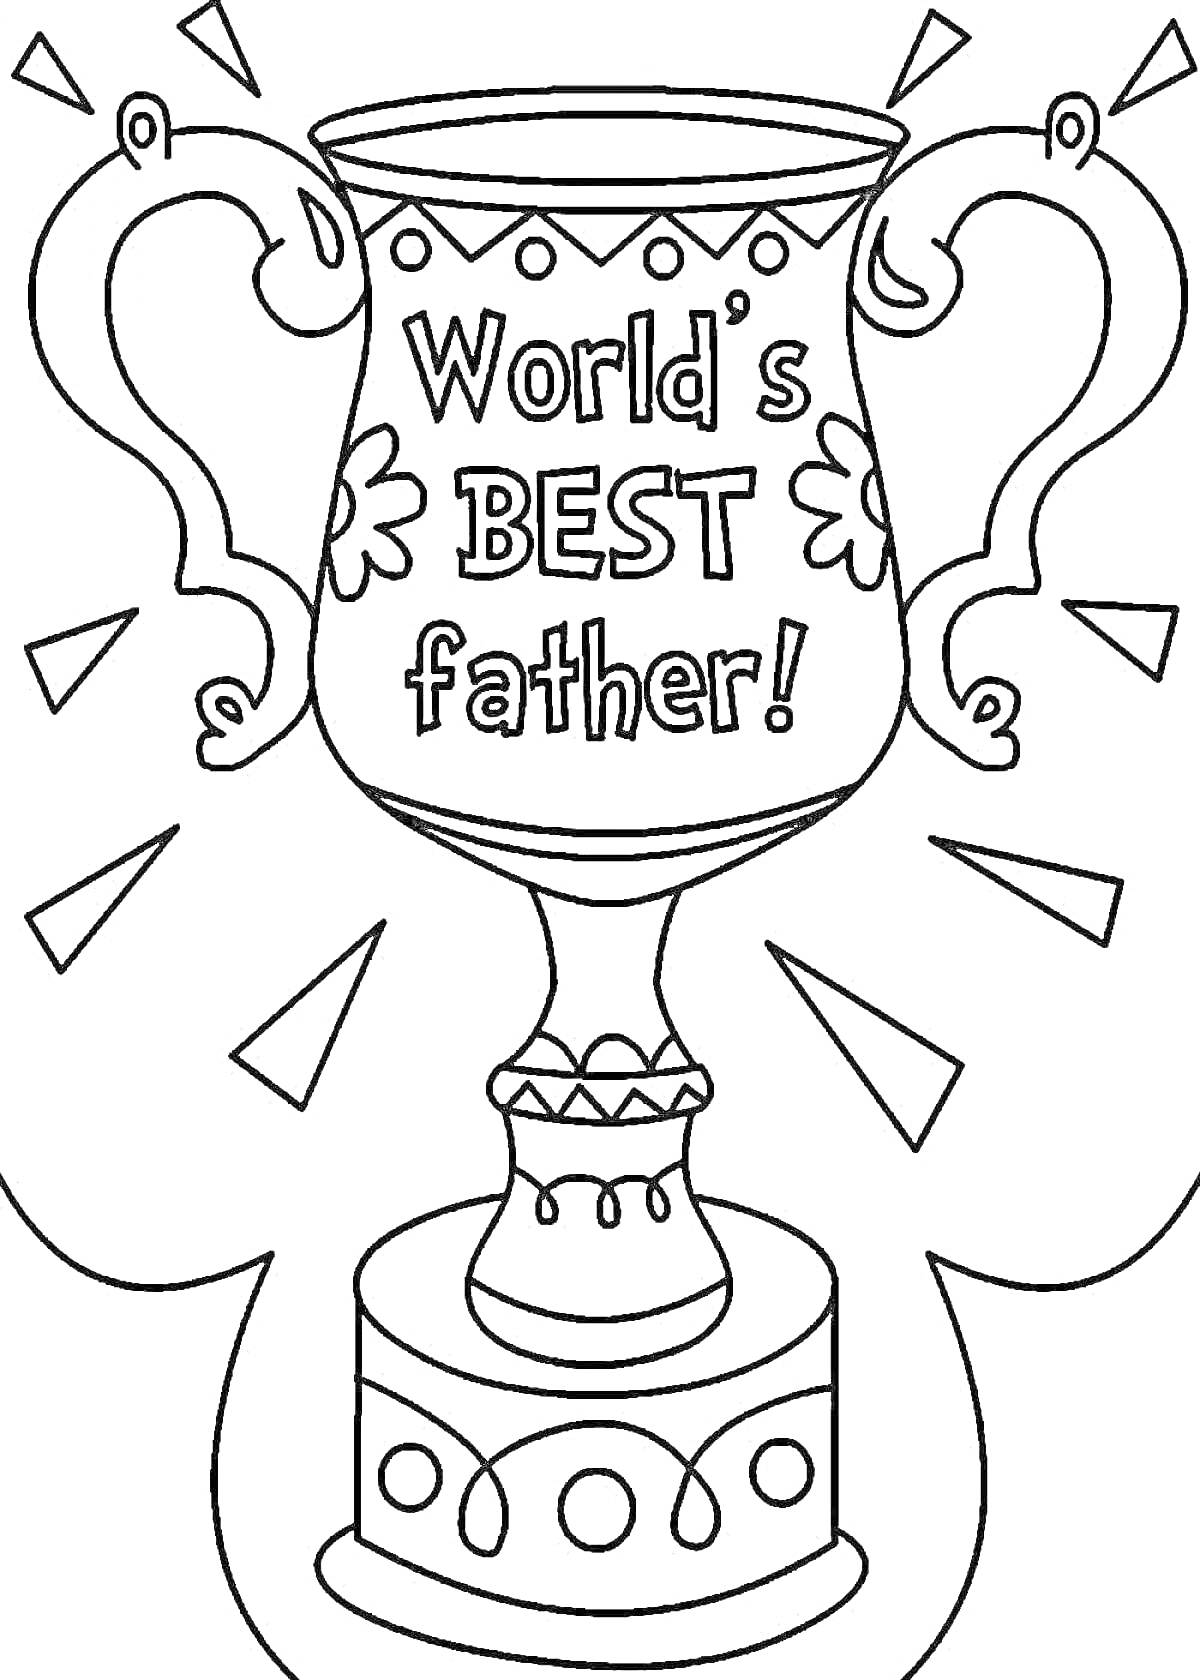 Раскраска Кубок World's BEST father! с узорами и лучами